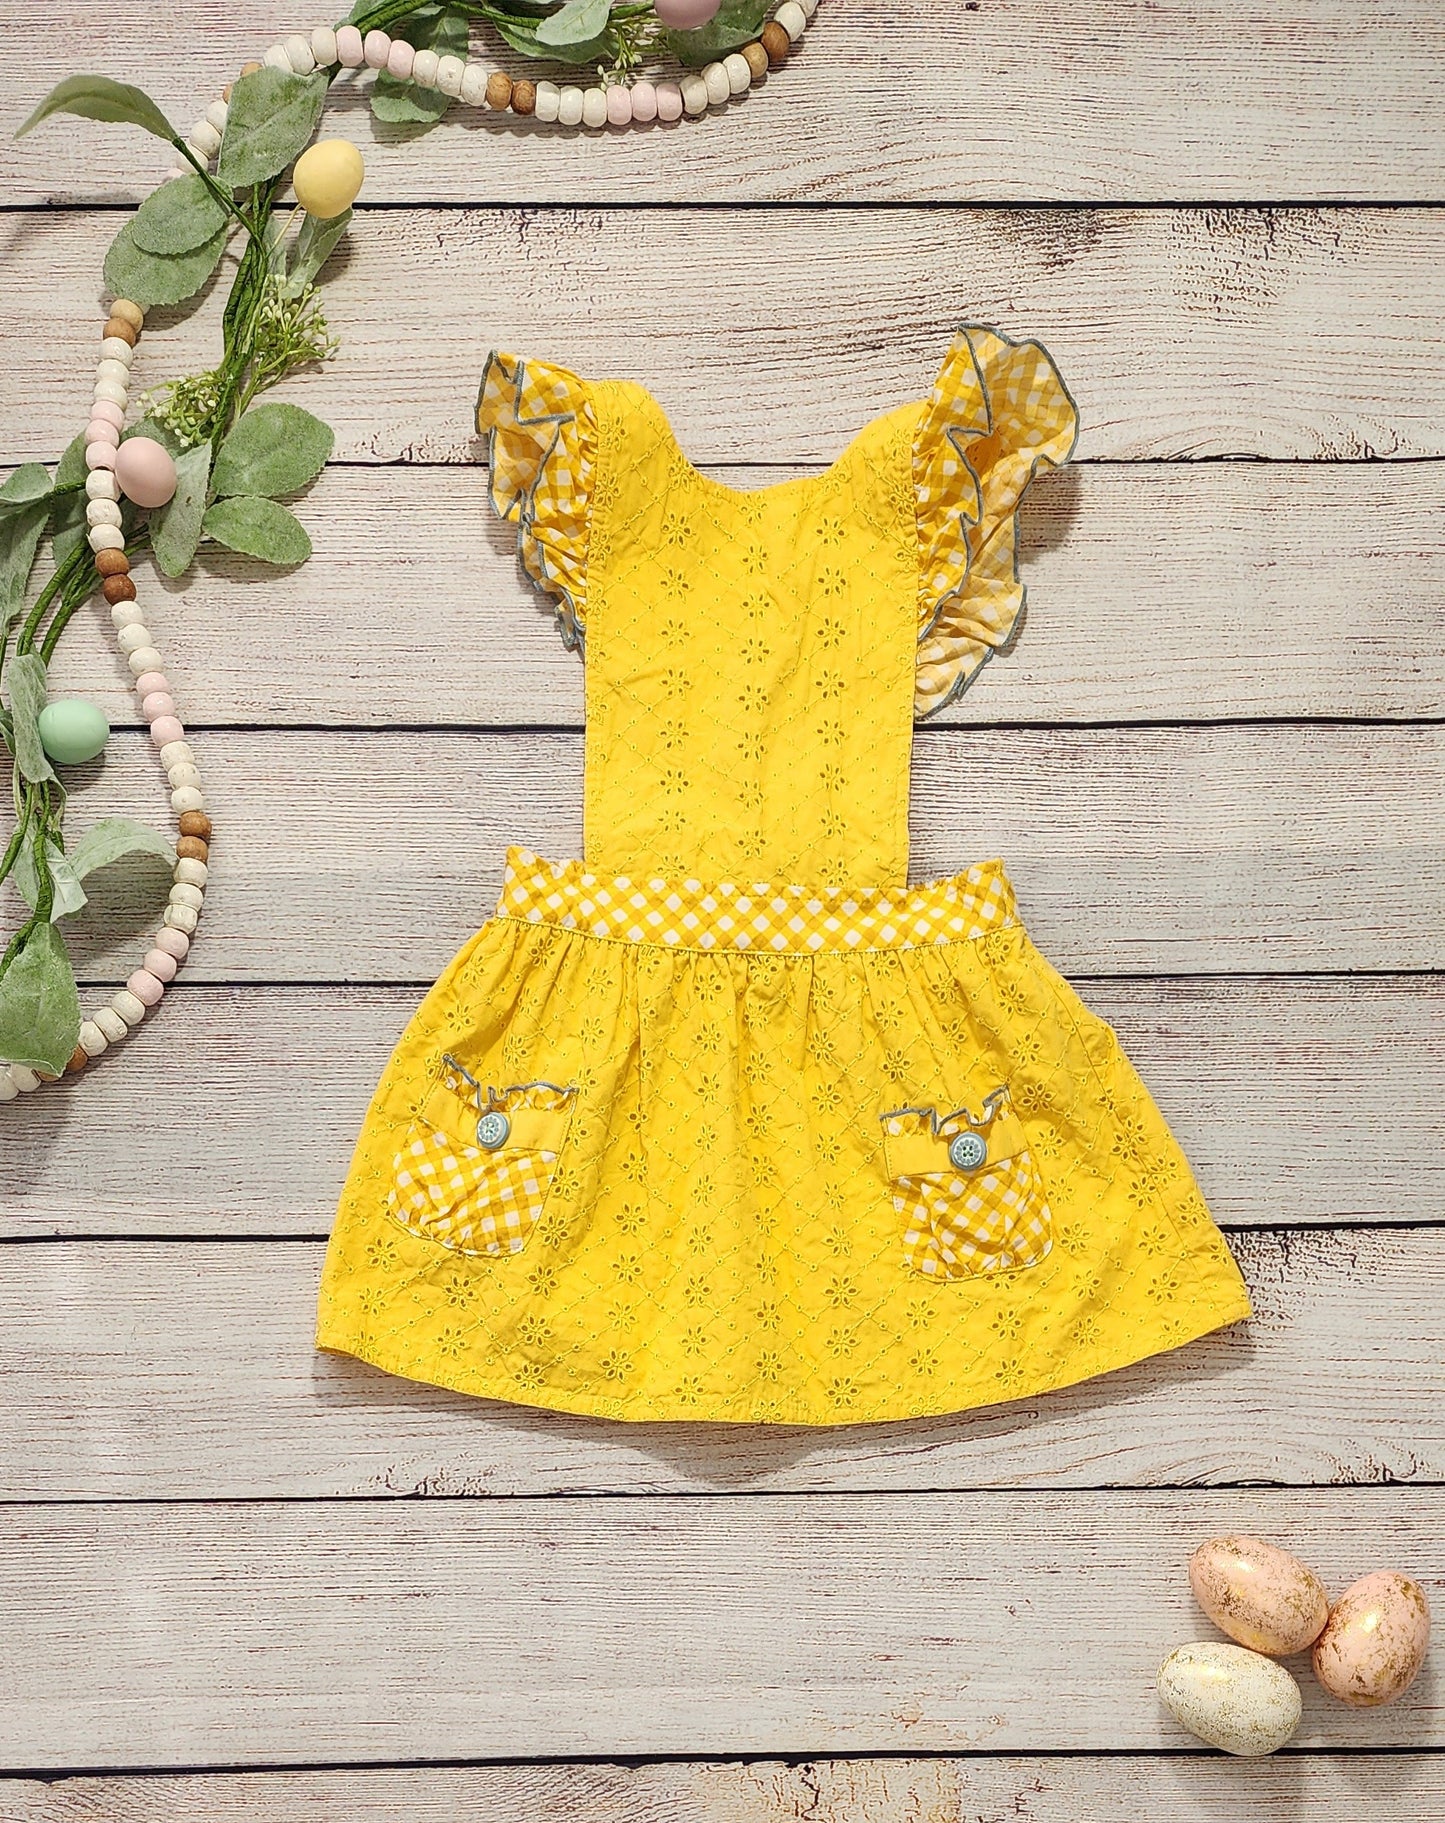 Matilda Jane Splendid Sunshine Pinafore Dress, Size 4